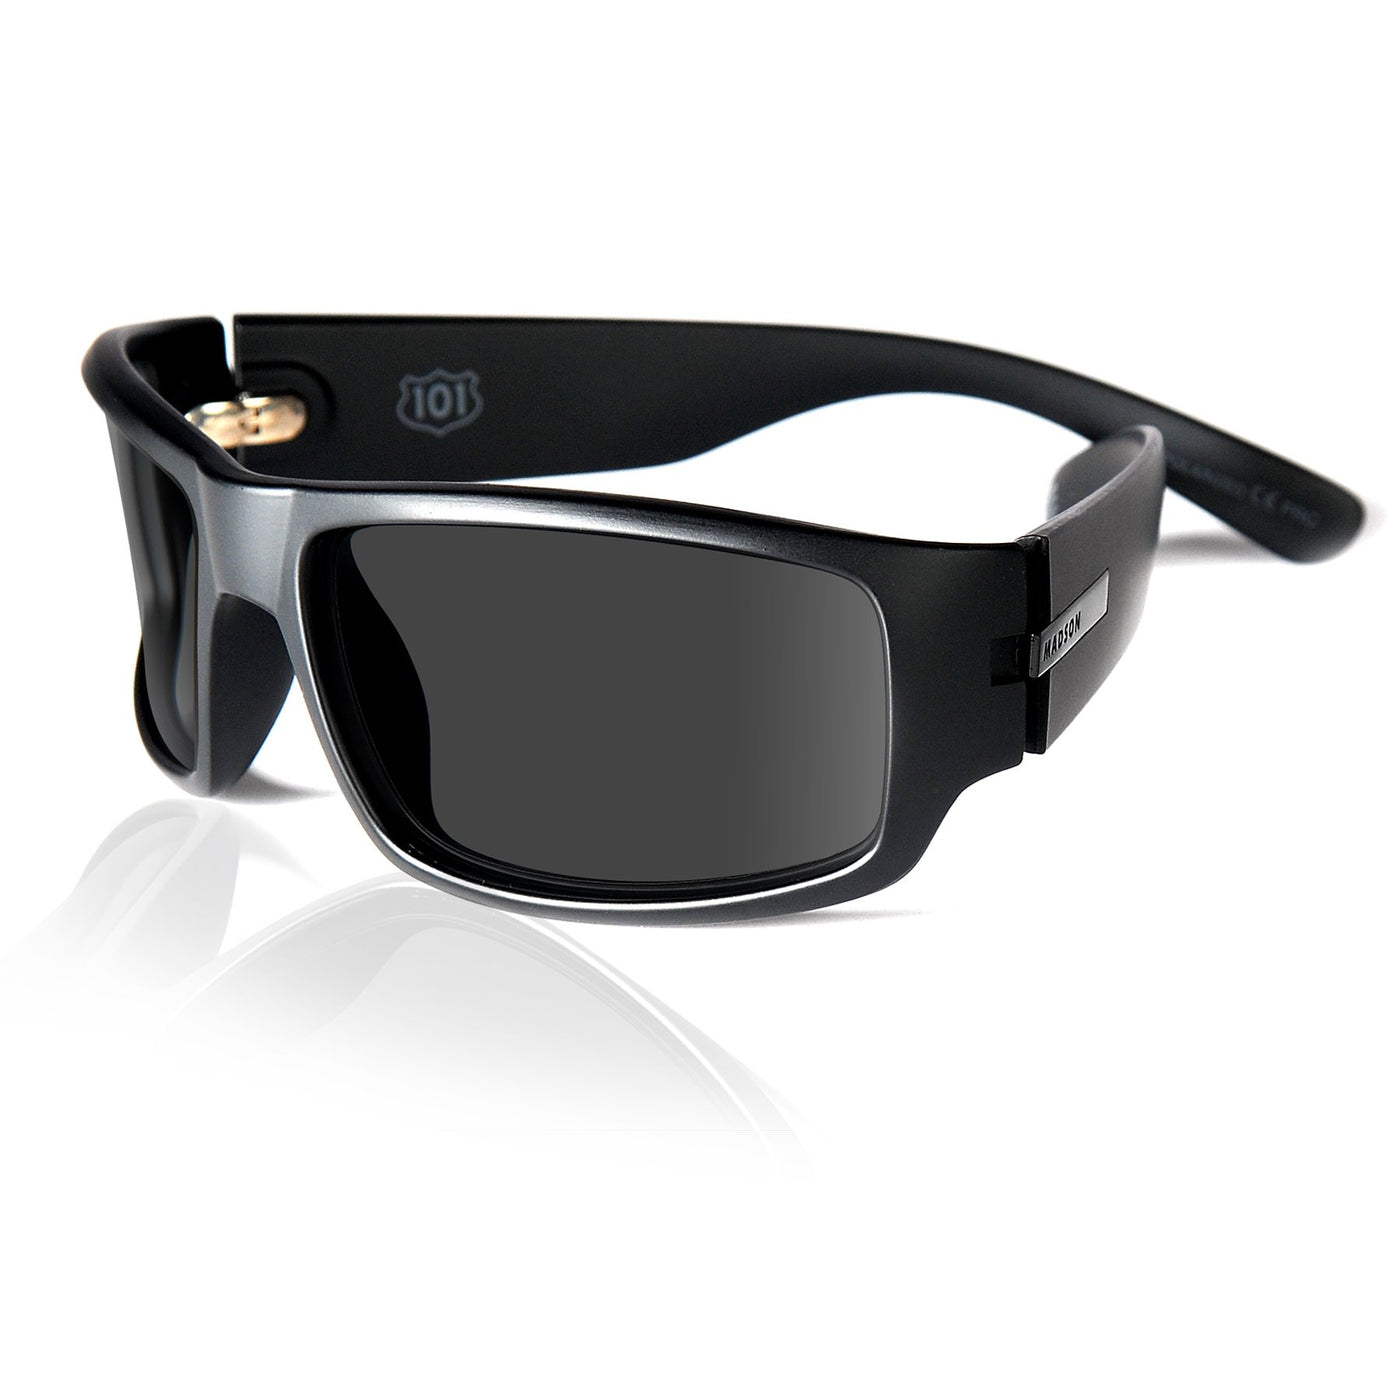 Madson of America 101 Polarized Sunglasses - Black